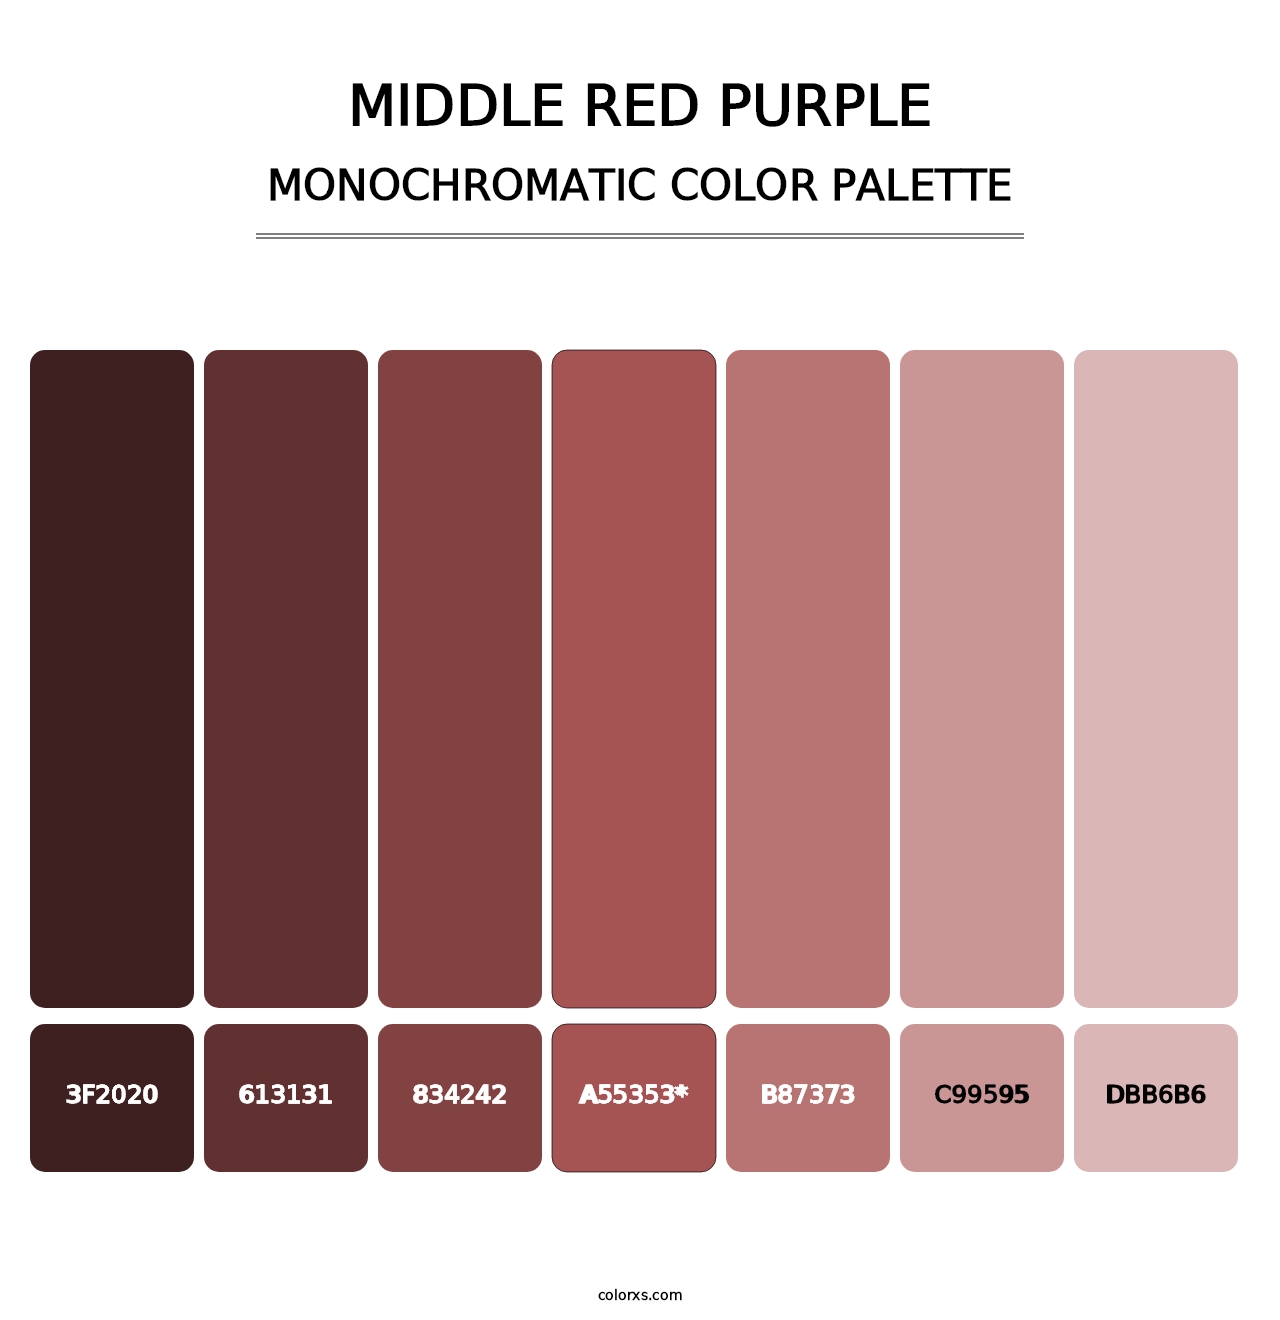 Middle Red Purple - Monochromatic Color Palette